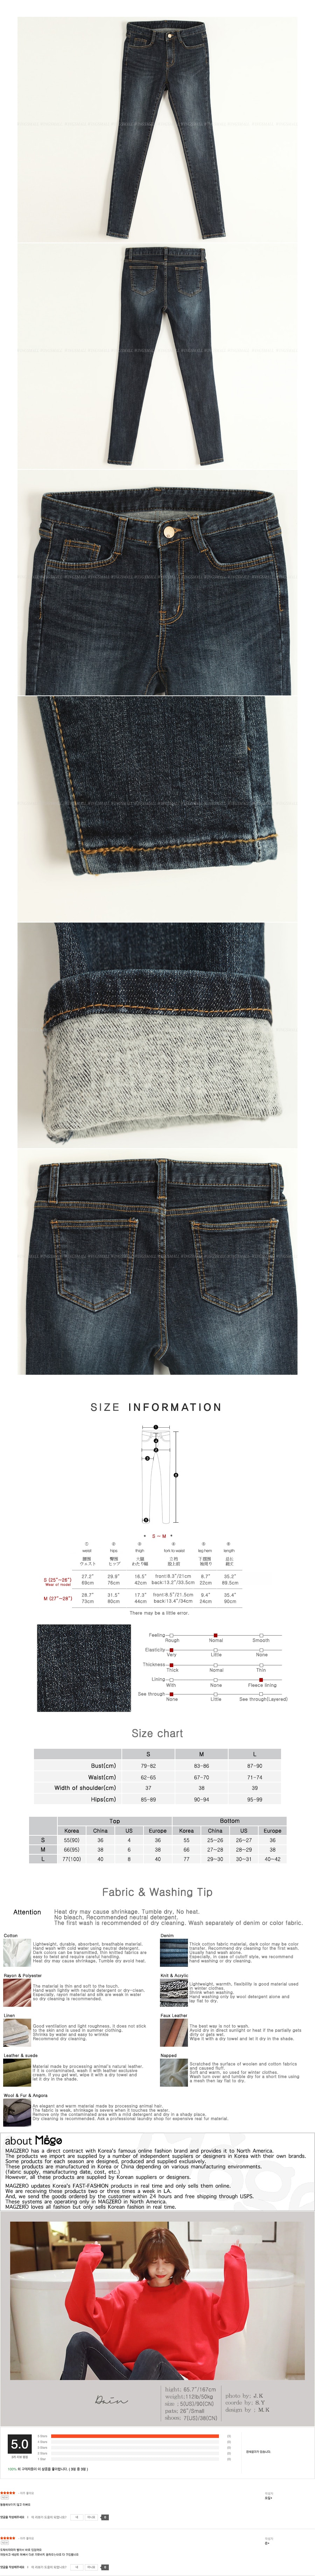 [KOREA] Fleece Lined Slim Skinny Jeans #Deep Blue S(25-26) [Free Shipping]